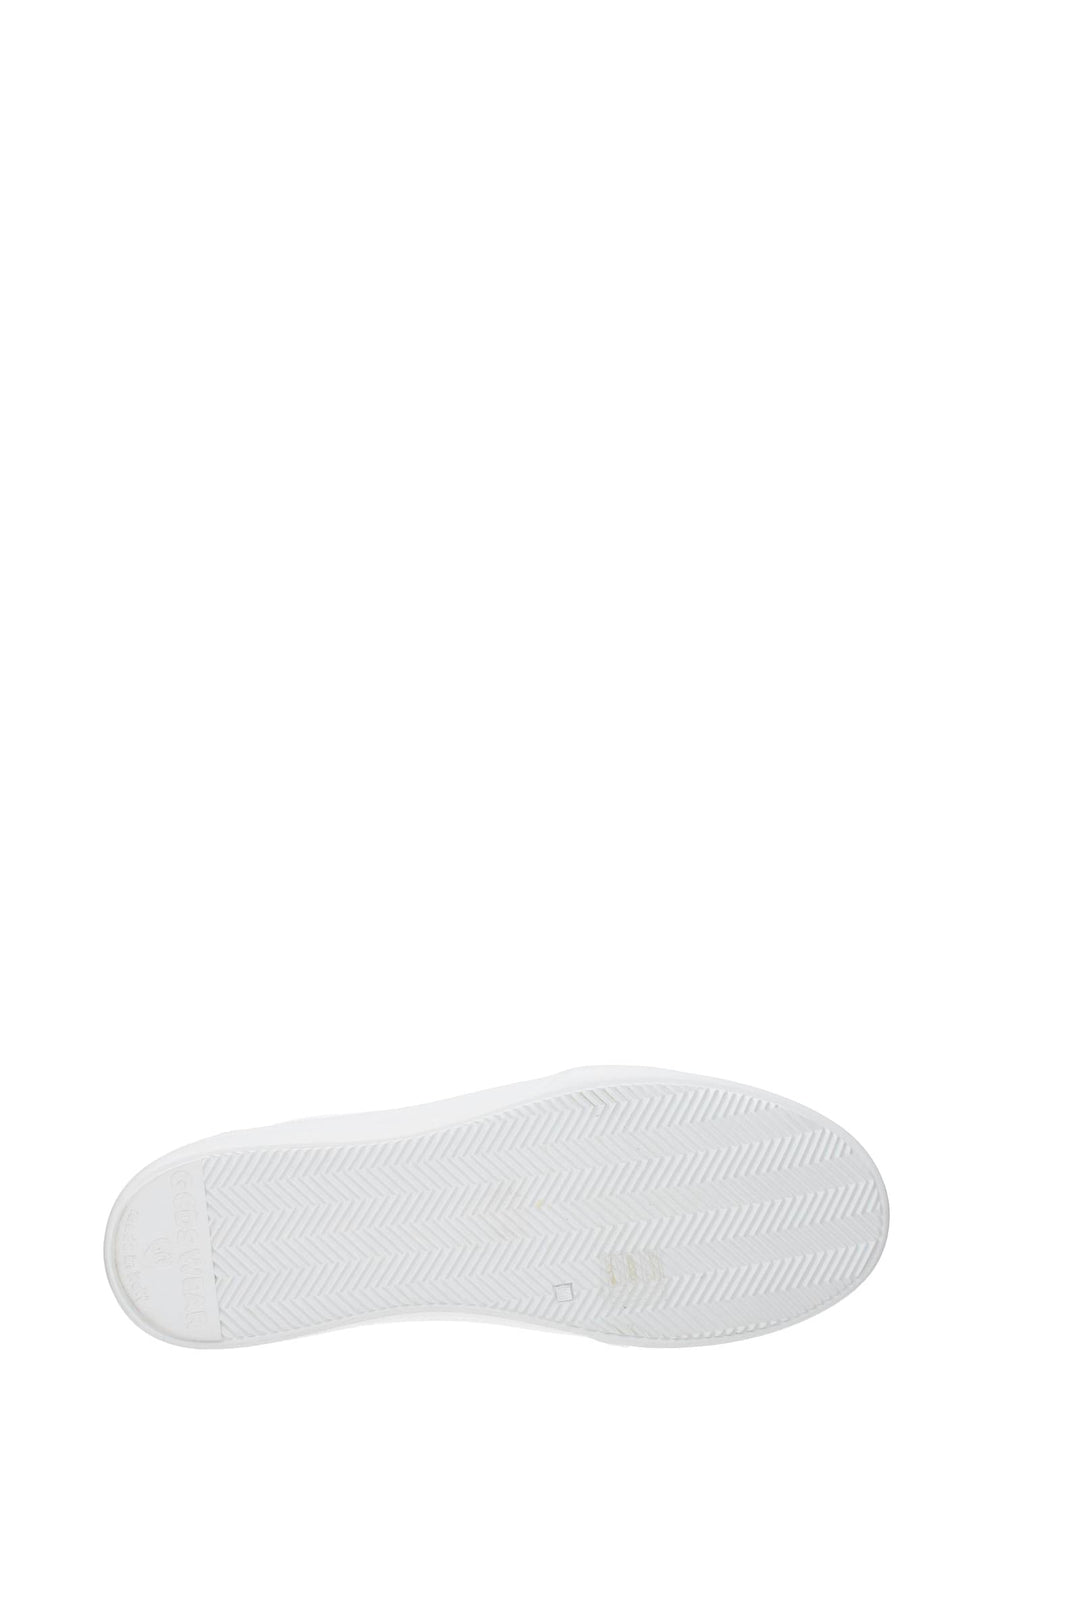 Sneakers Eco Pelle Bianco Nero - GCDS - Uomo